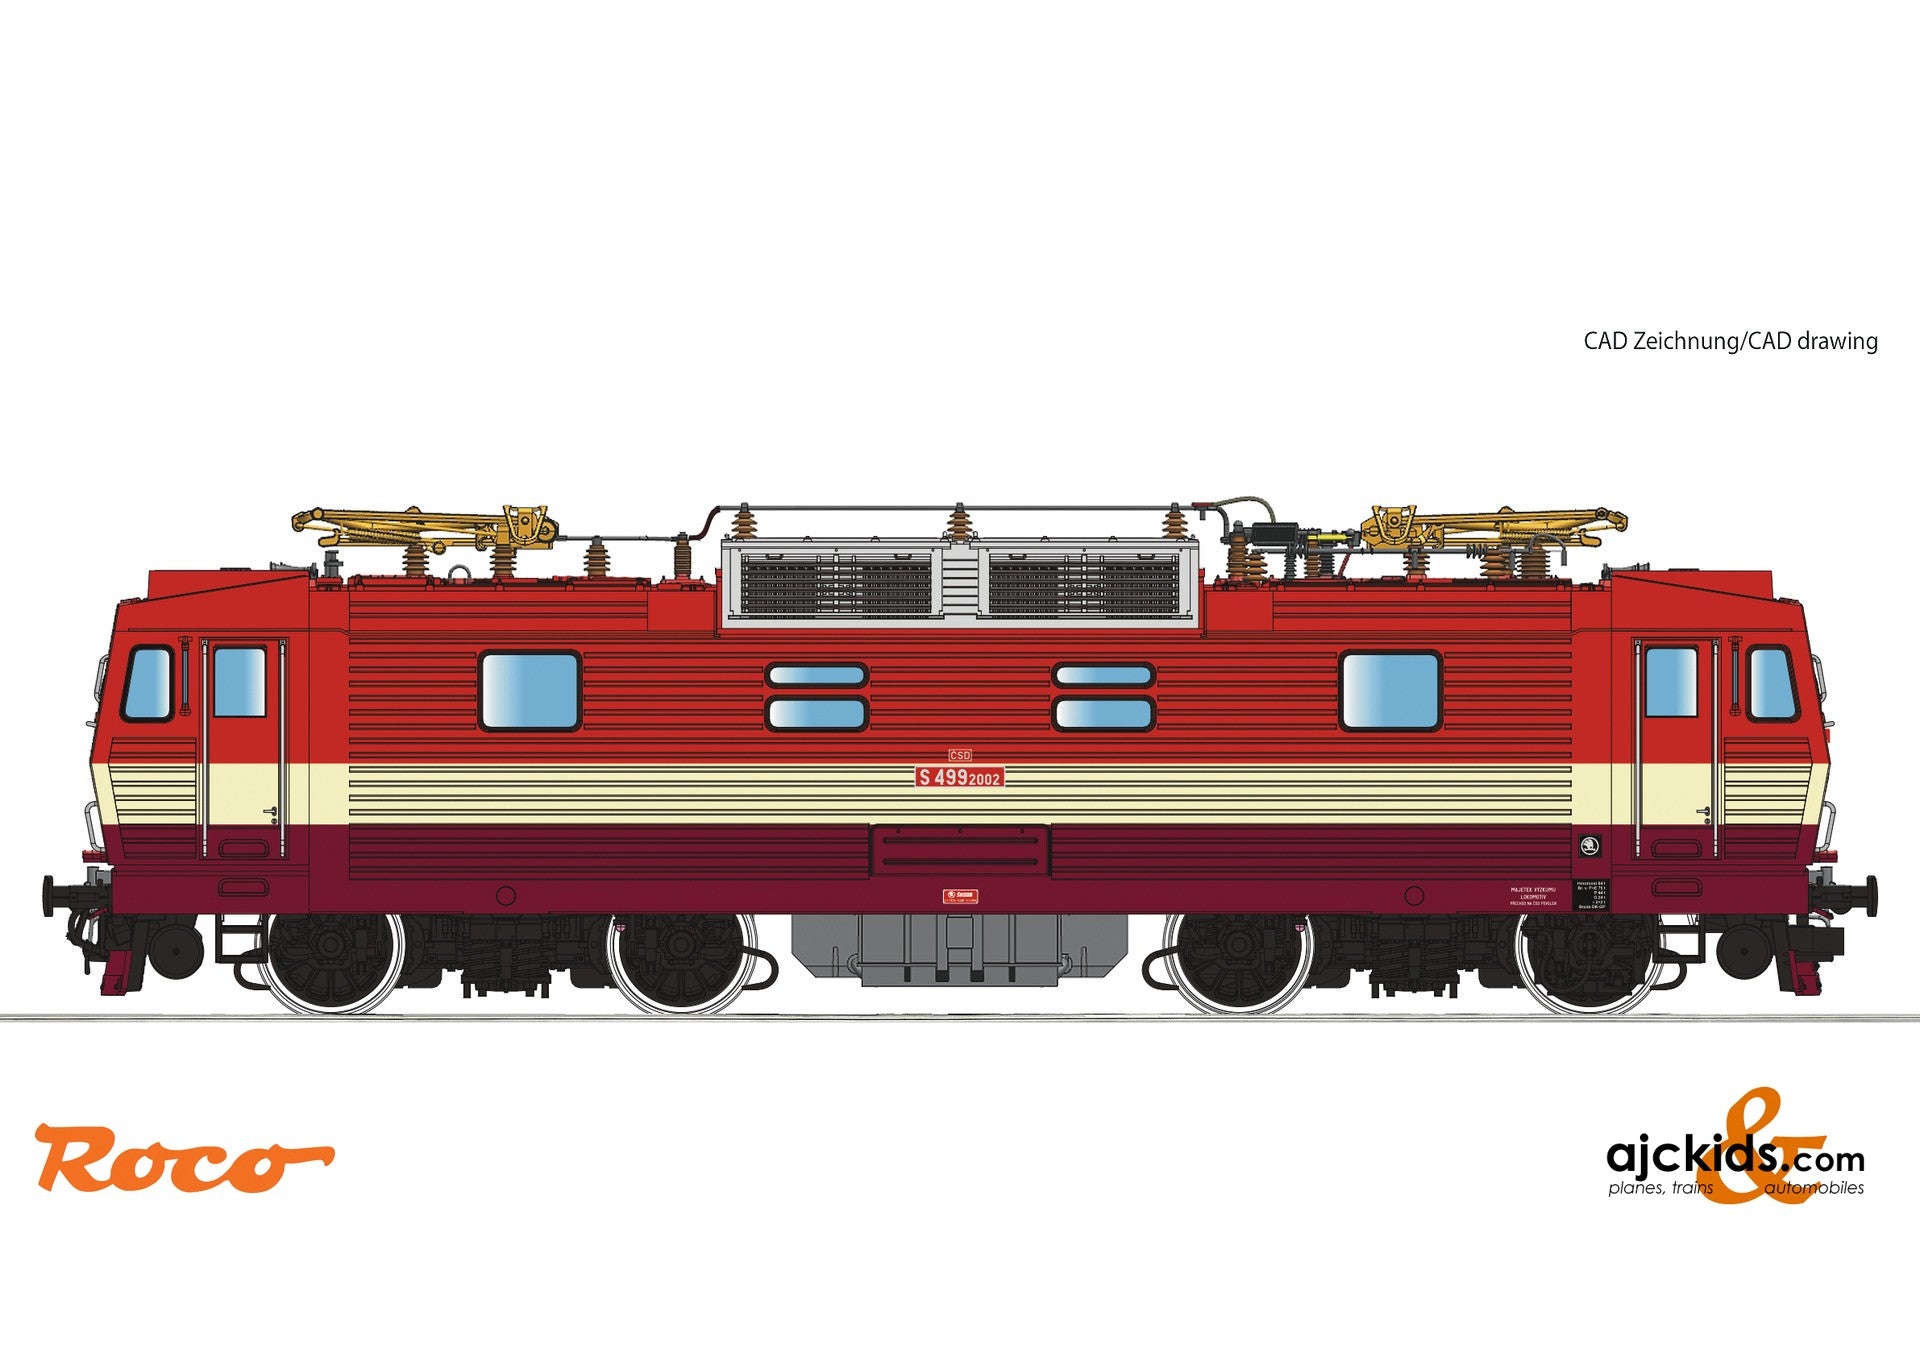 Roco 79239 -Electric locomotive S 499.2002, CSD